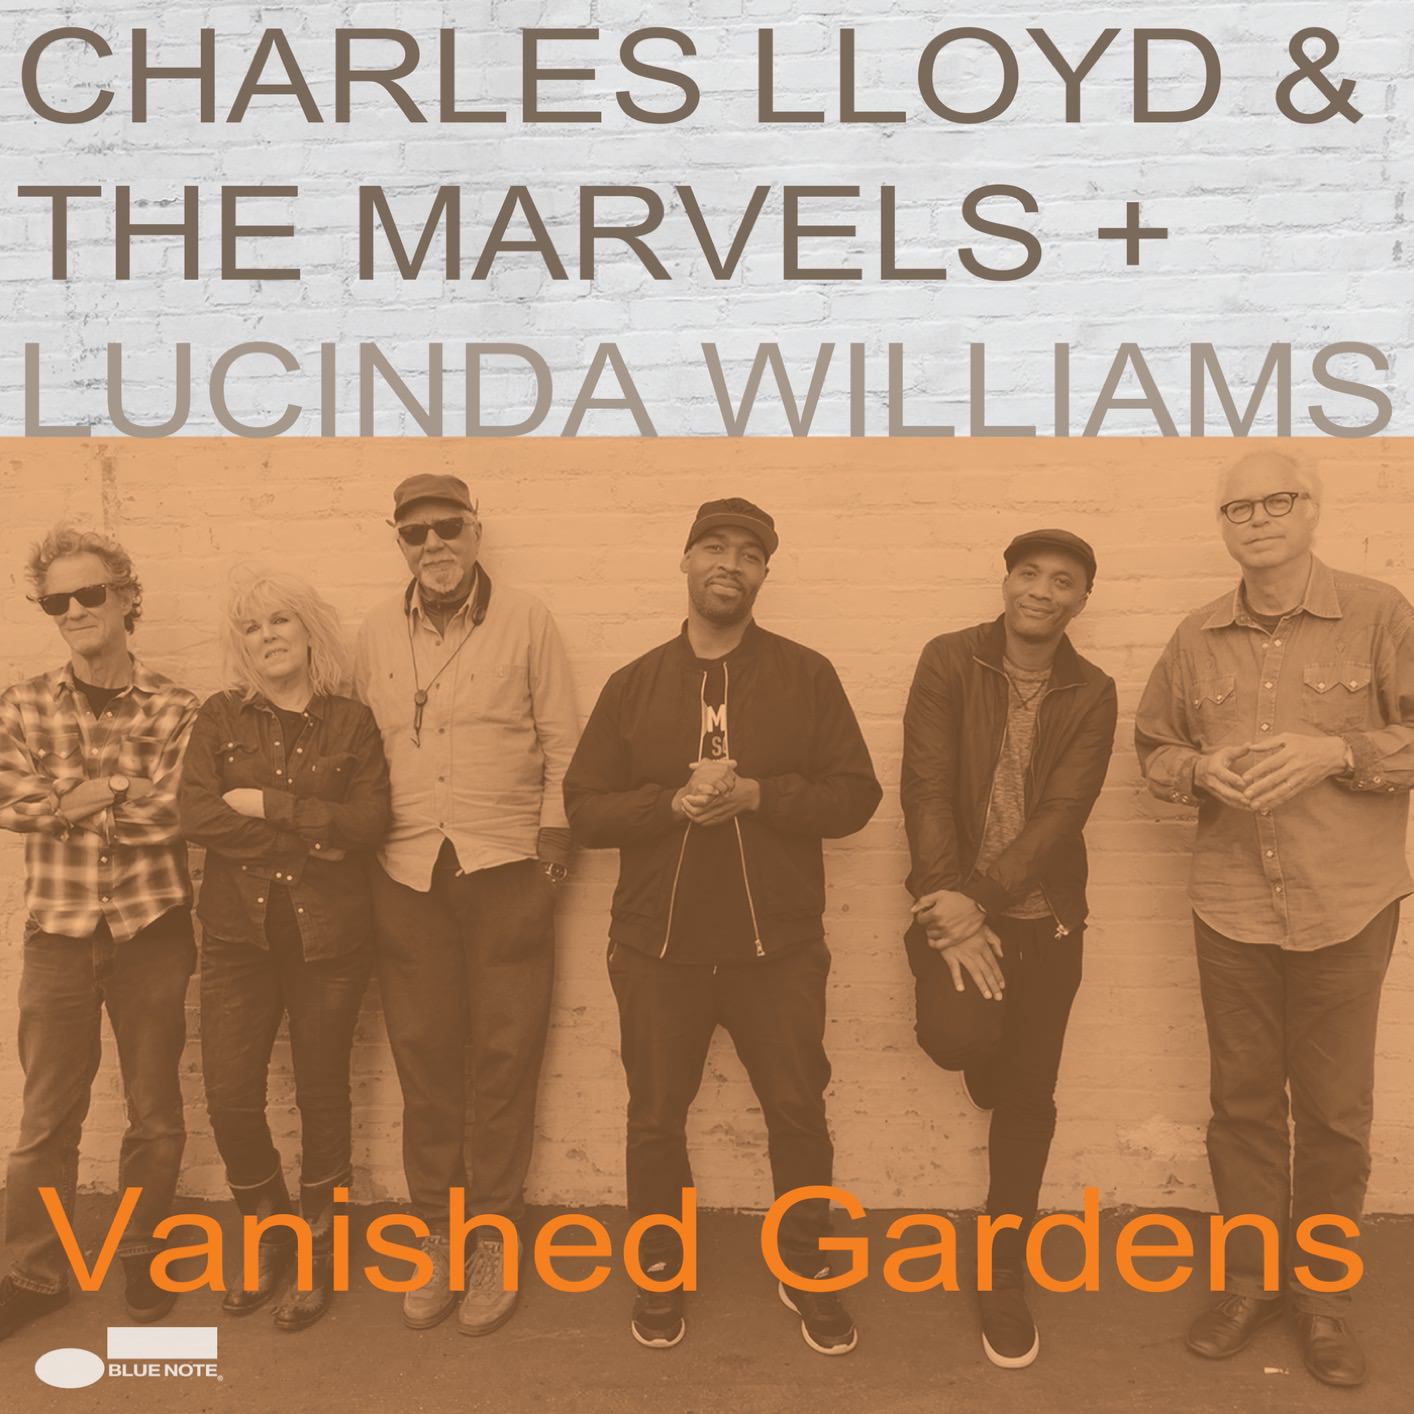 Charles Lloyd & The Marvels + Lucinda Williams - Vanished Gardens (2018) [FLAC 24bit/96kHz]